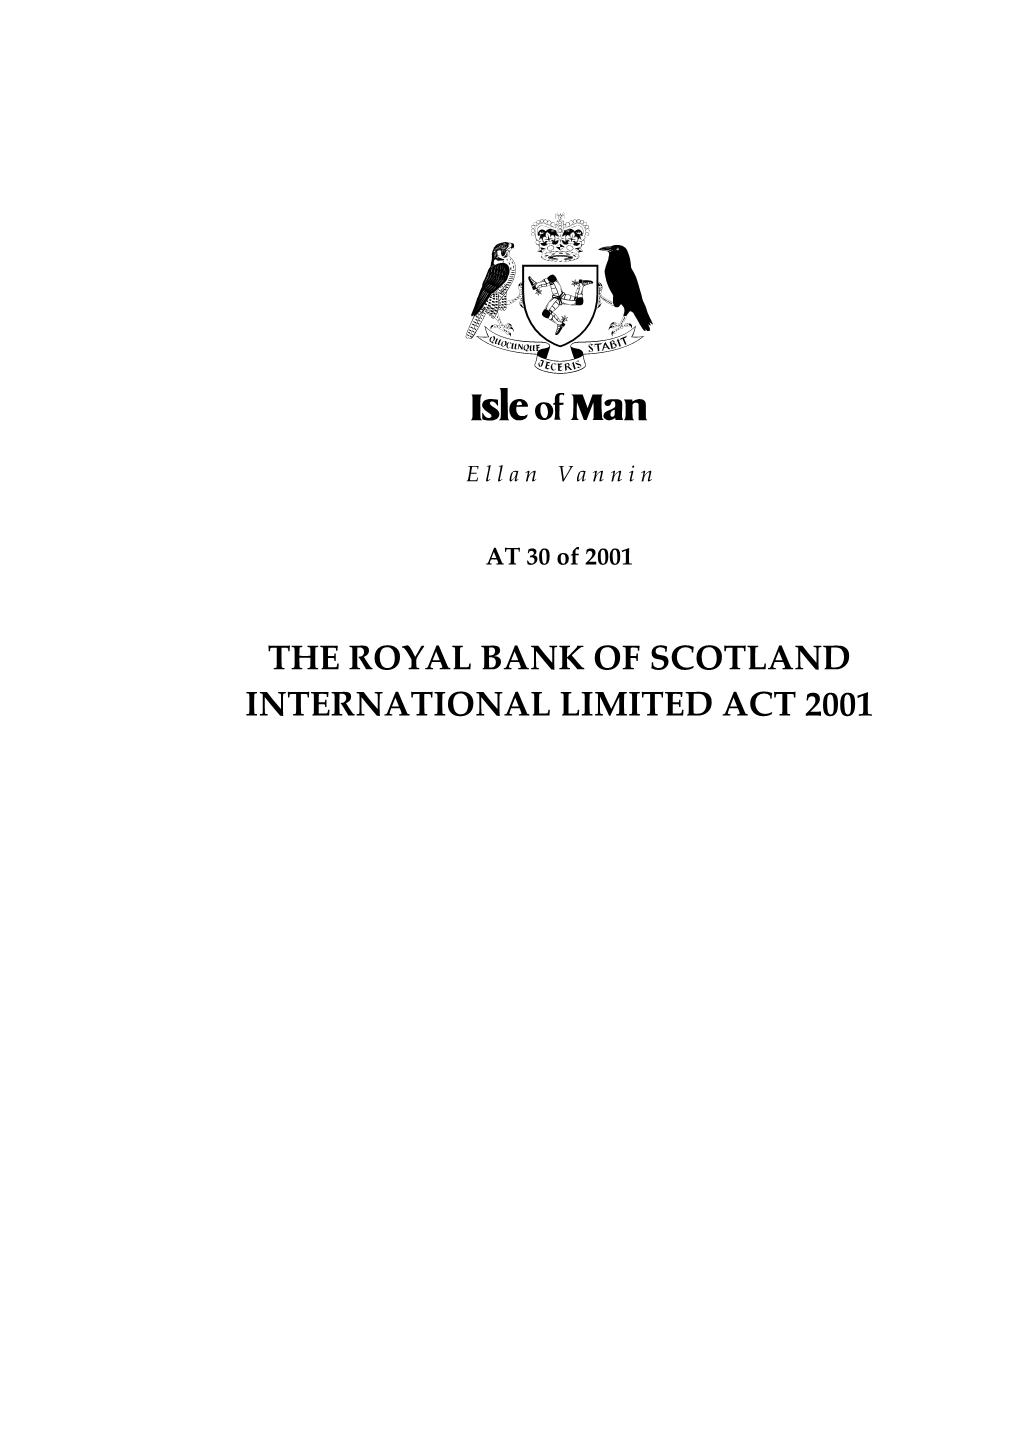 The Royal Bank of Scotland International Limited Act 2001